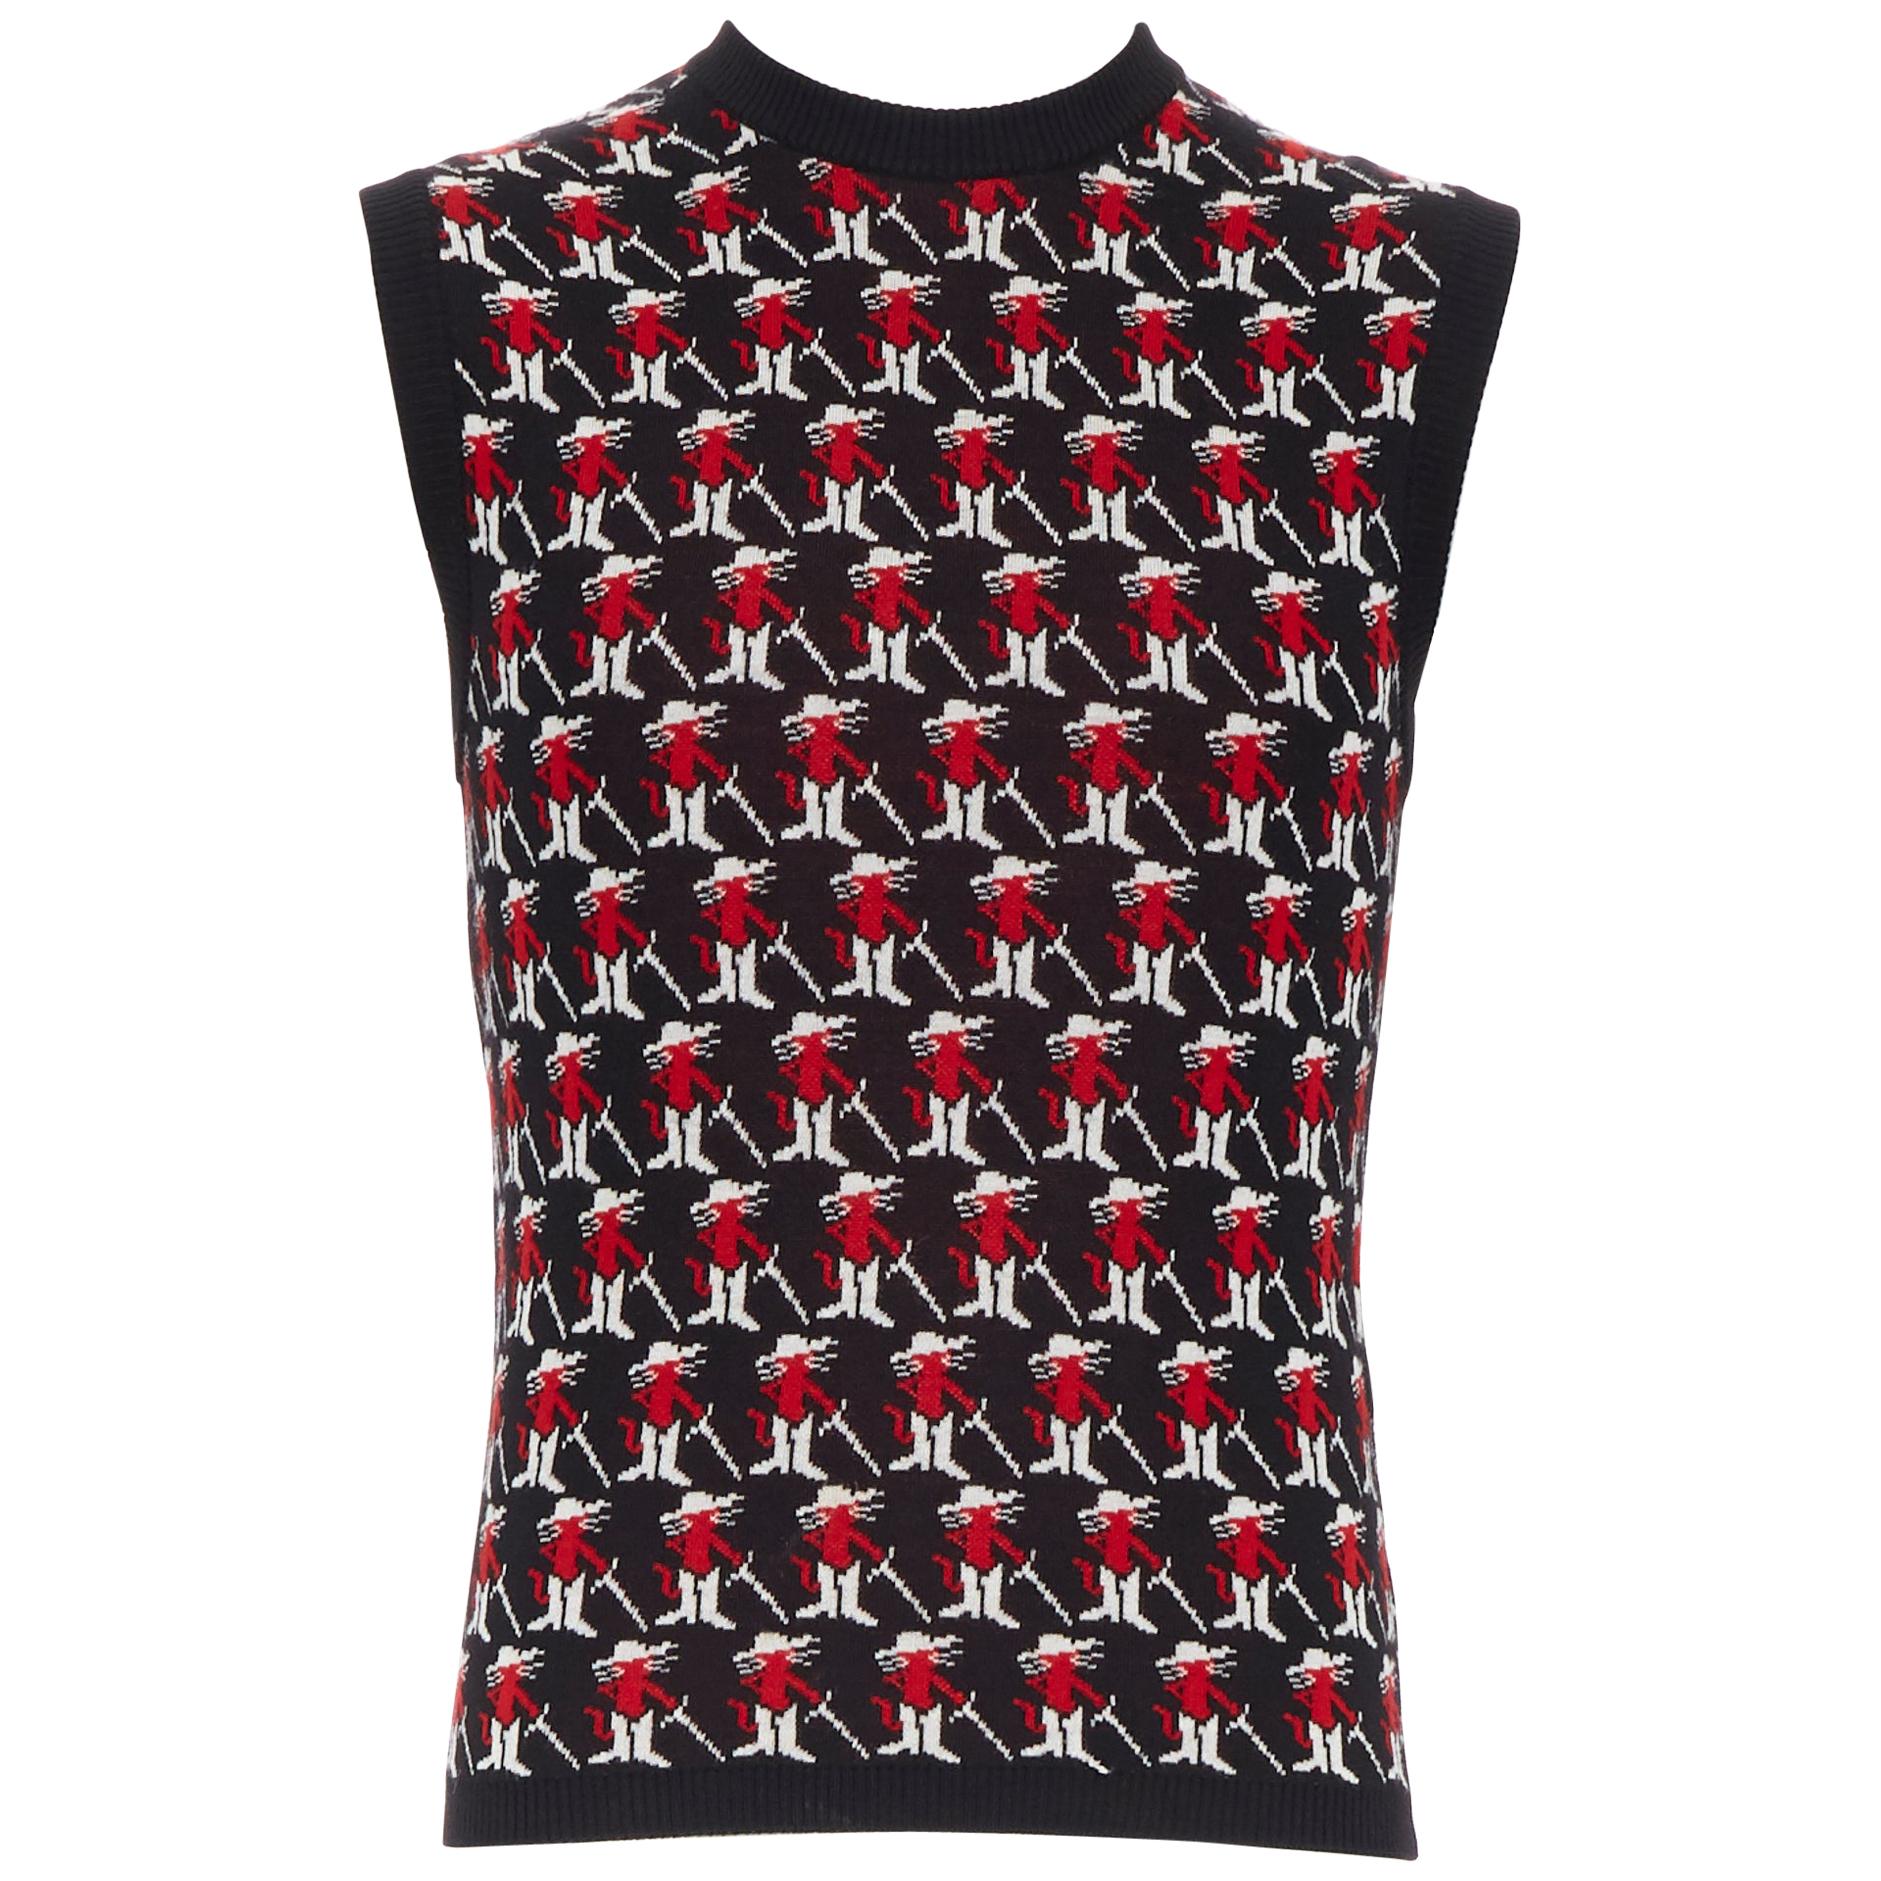 RAF SIMONS 100% merino wool red figurine knitted sleeveless sweater vest S